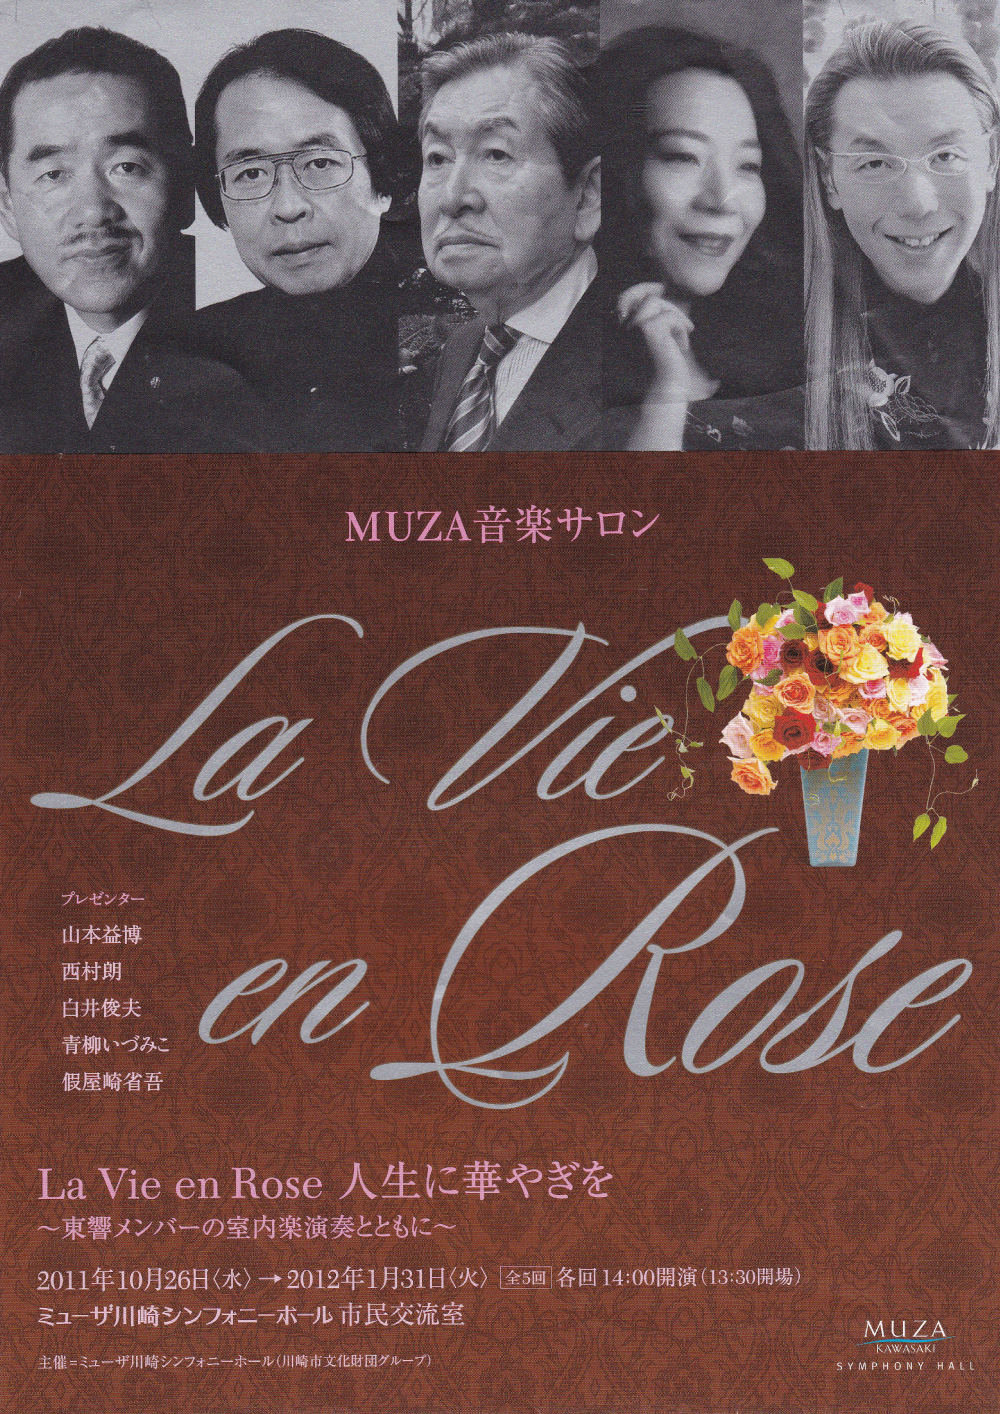 MUZA音楽サロン「La Vie en Rose」